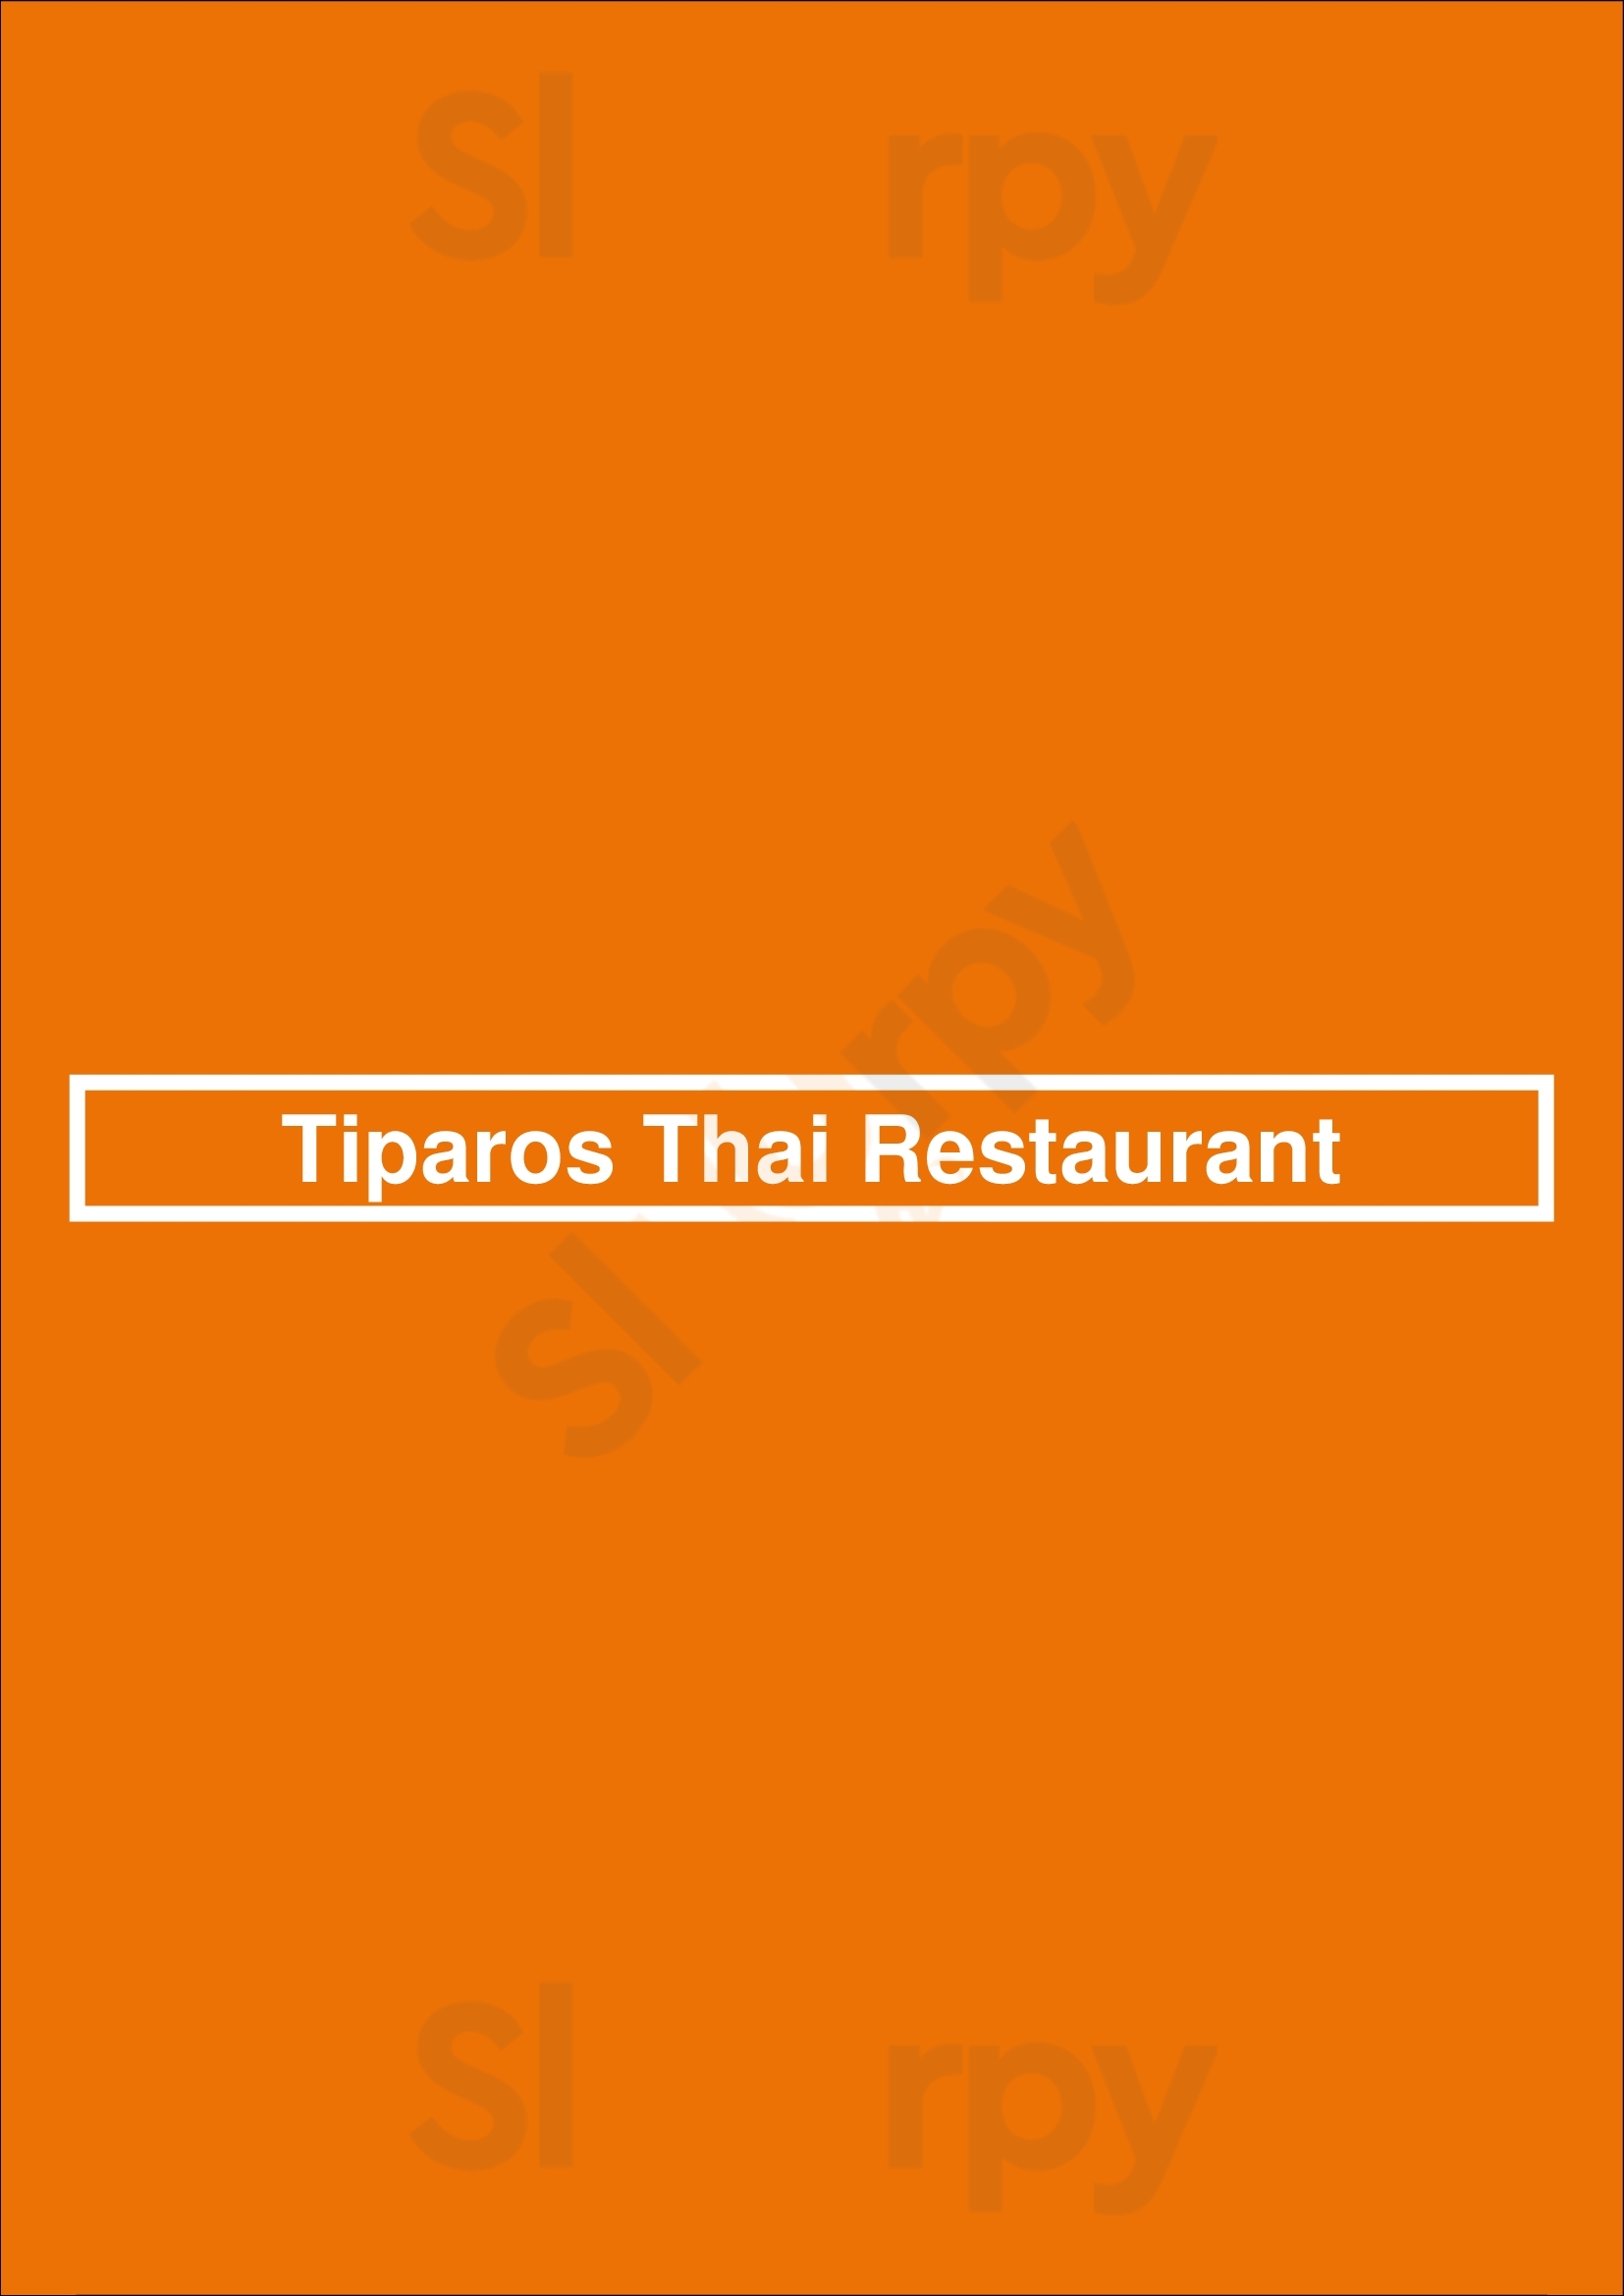 Tiparos Thai Cuisine & Sushi Bar Chicago Menu - 1